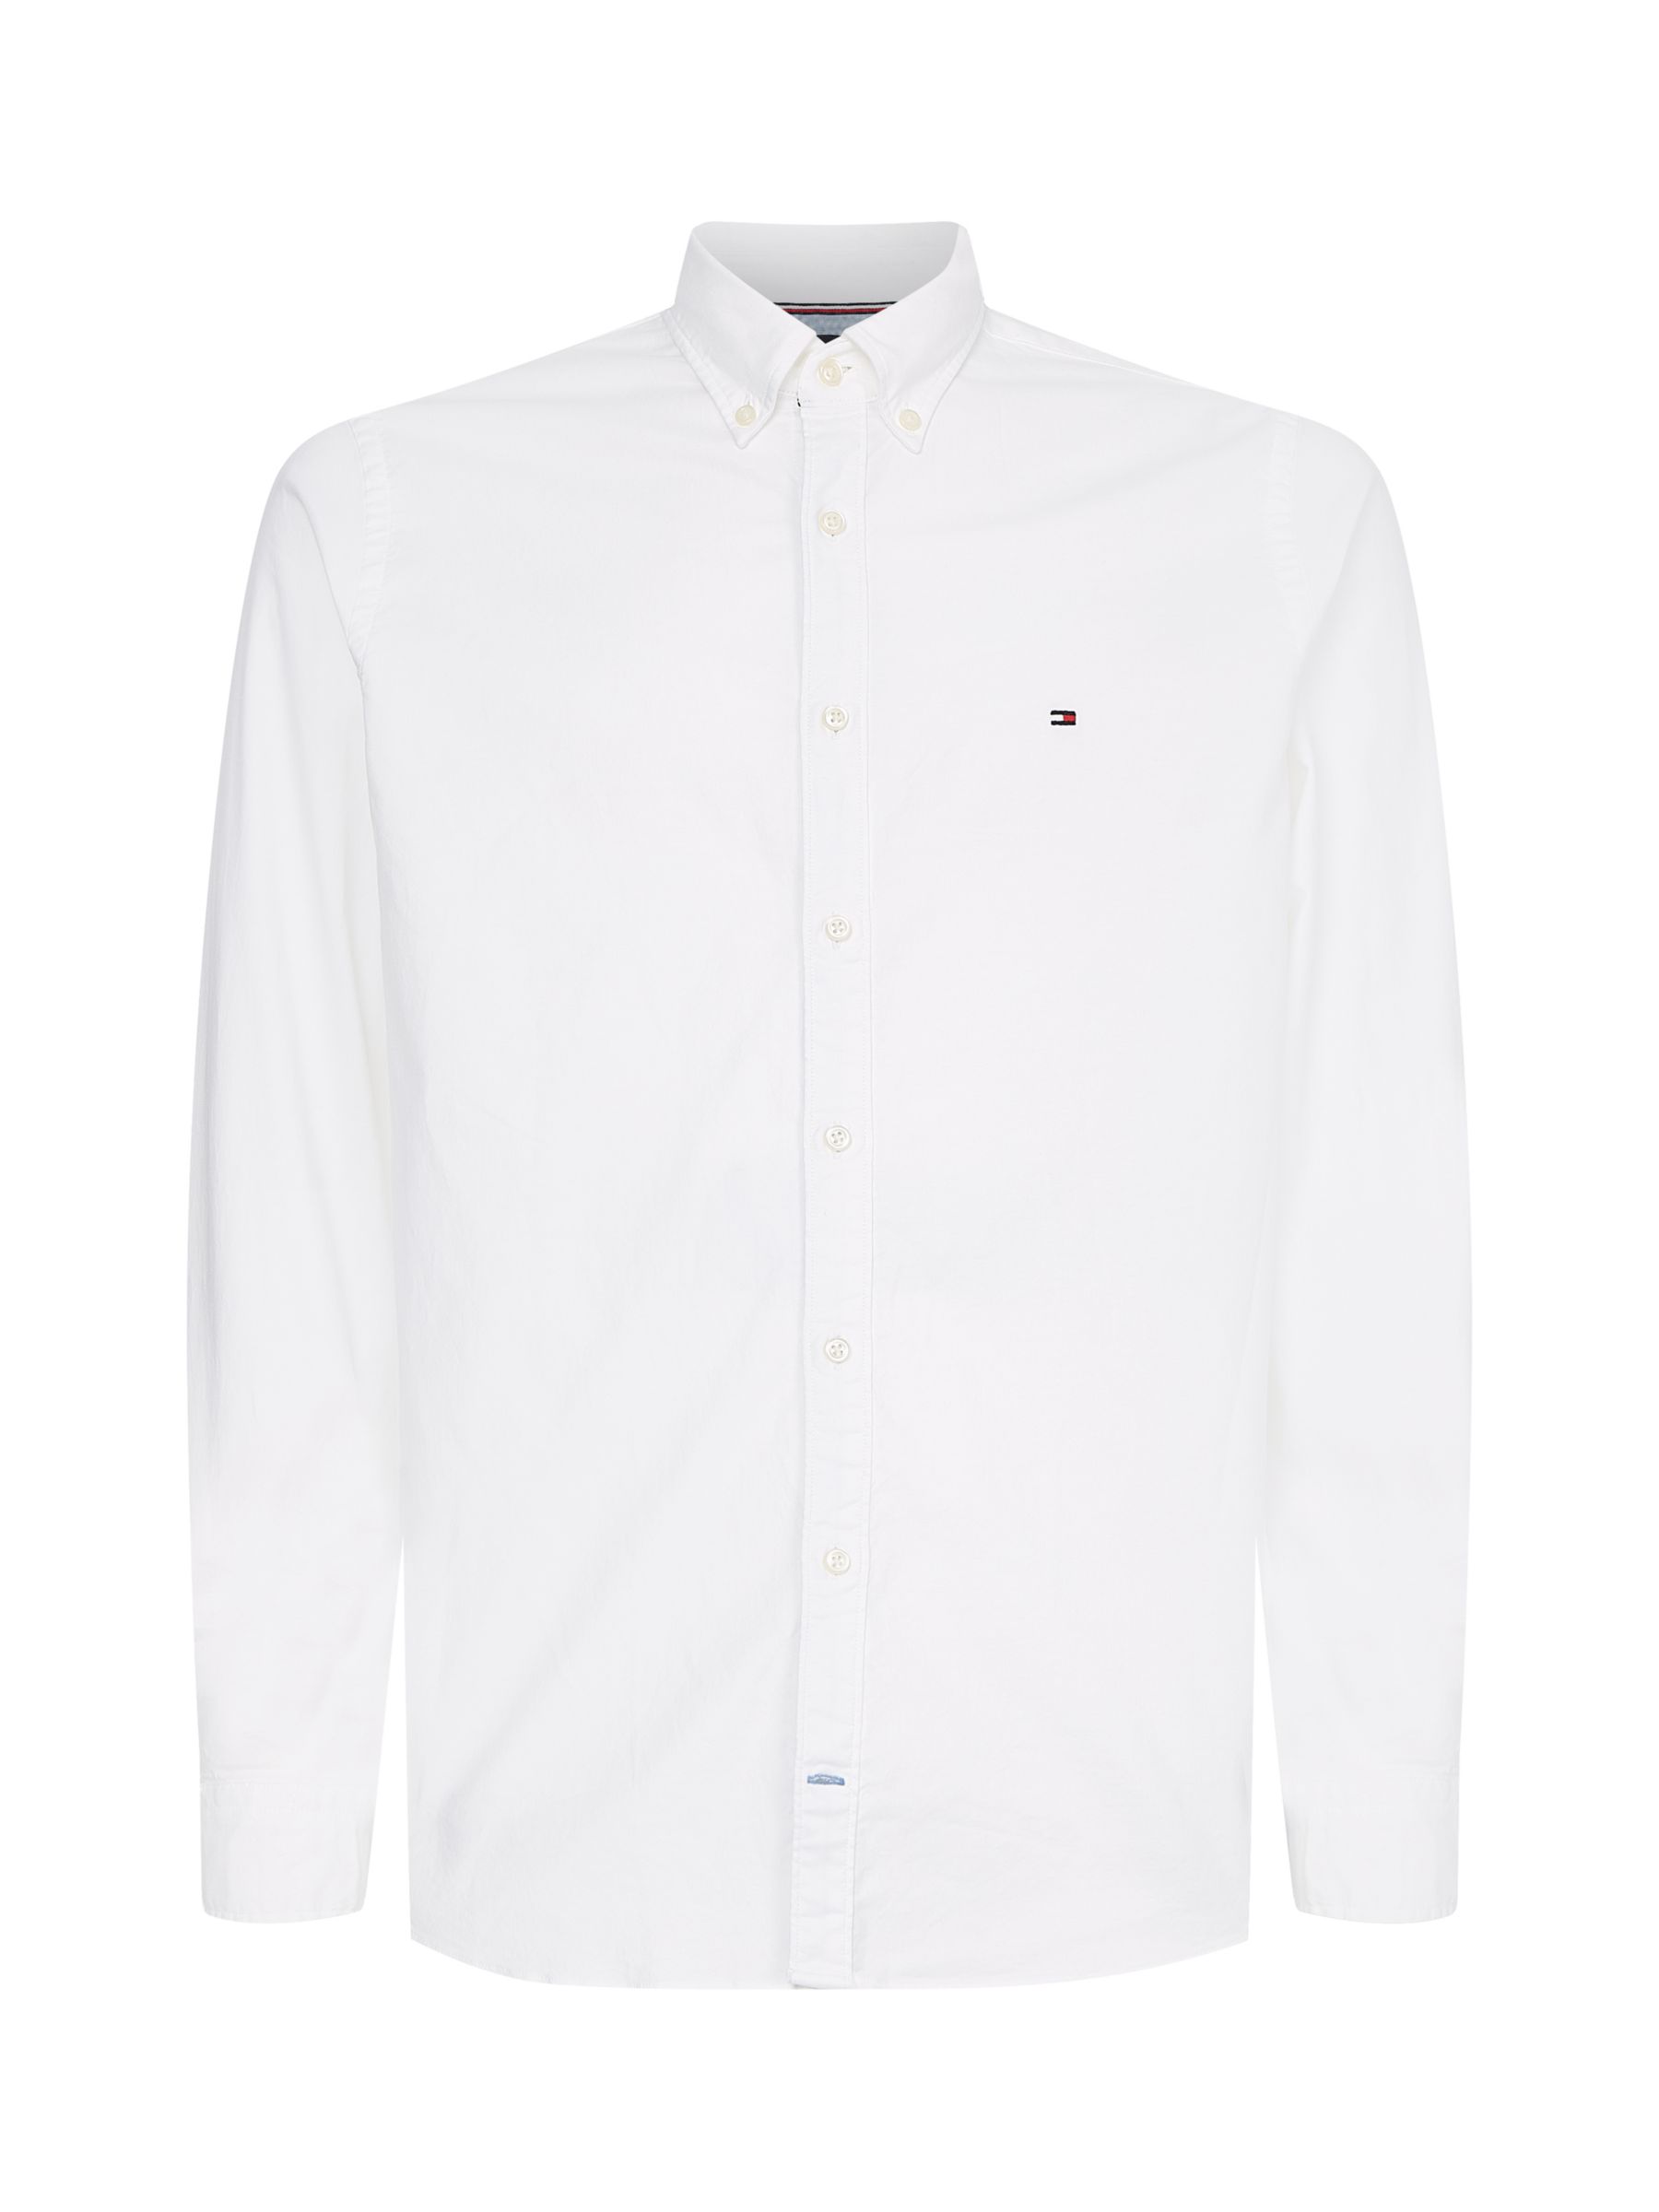 Tommy Hilfiger Slim Cotton Oxford Shirt, Bright White at John Lewis & Partners